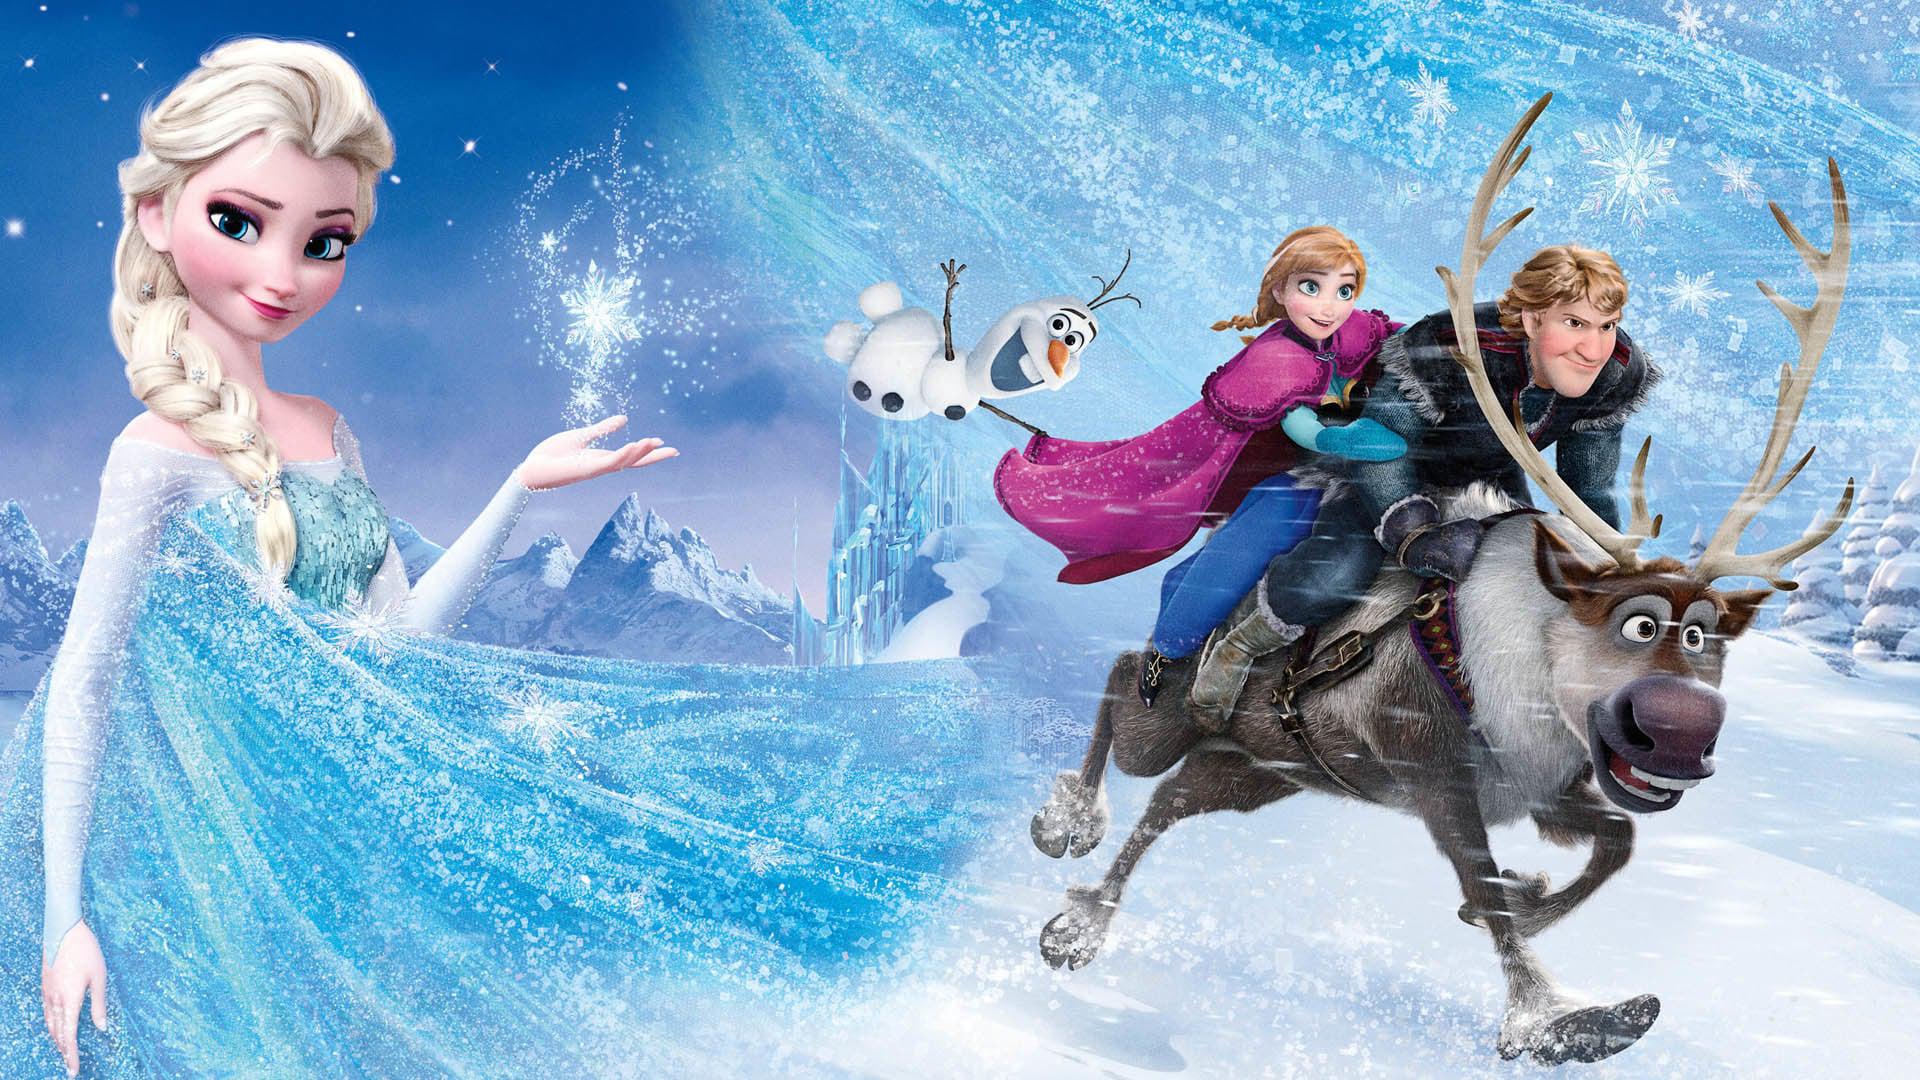 Backdrop Image for Disney's Frozen